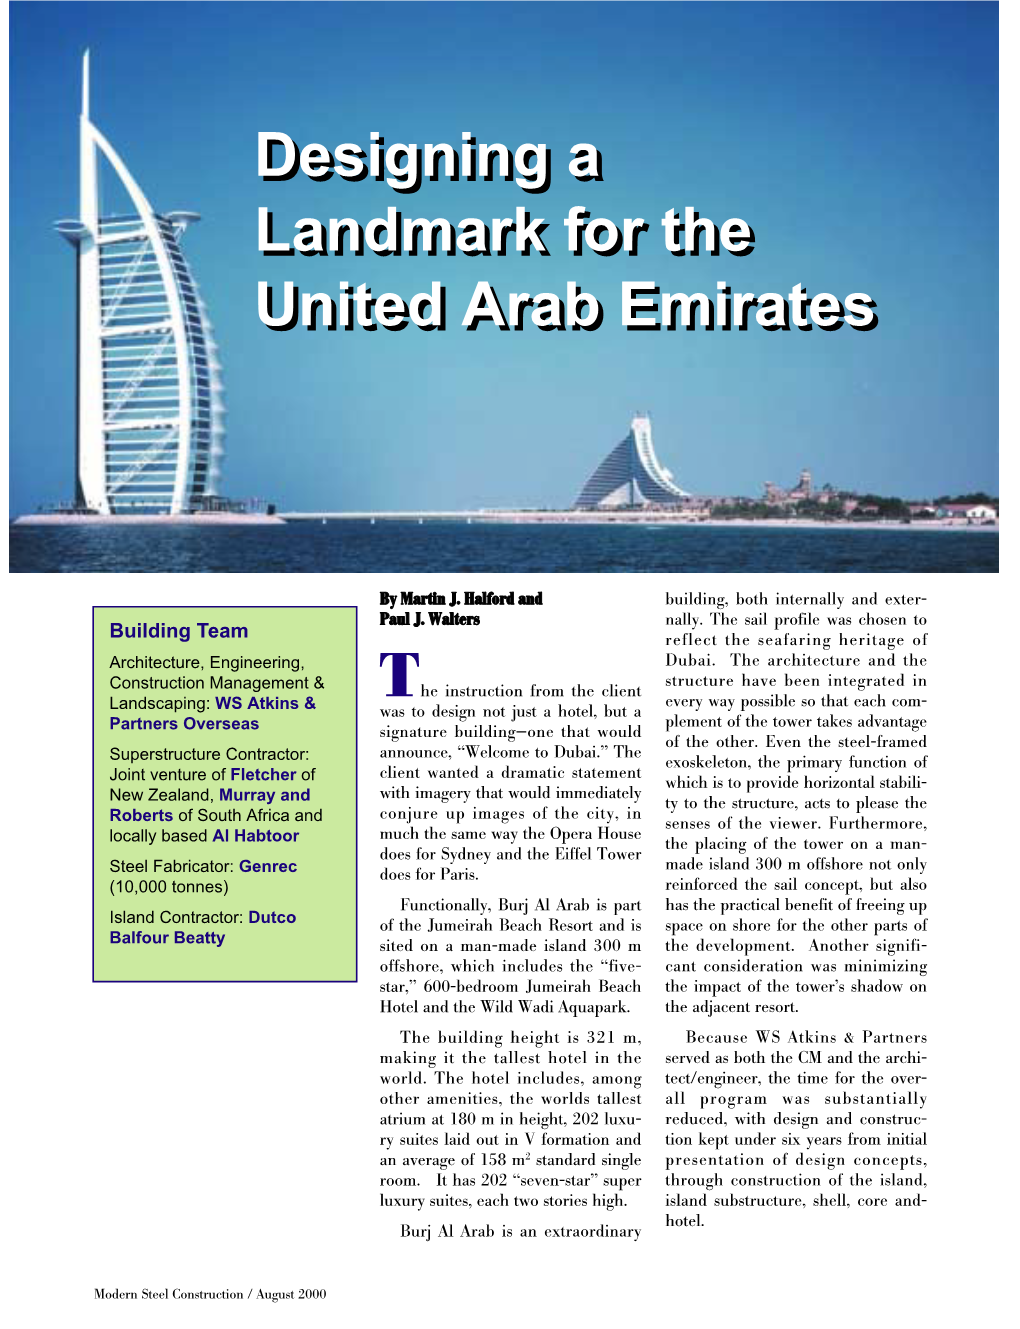 Designing a Landmark for the United Arab Emirates